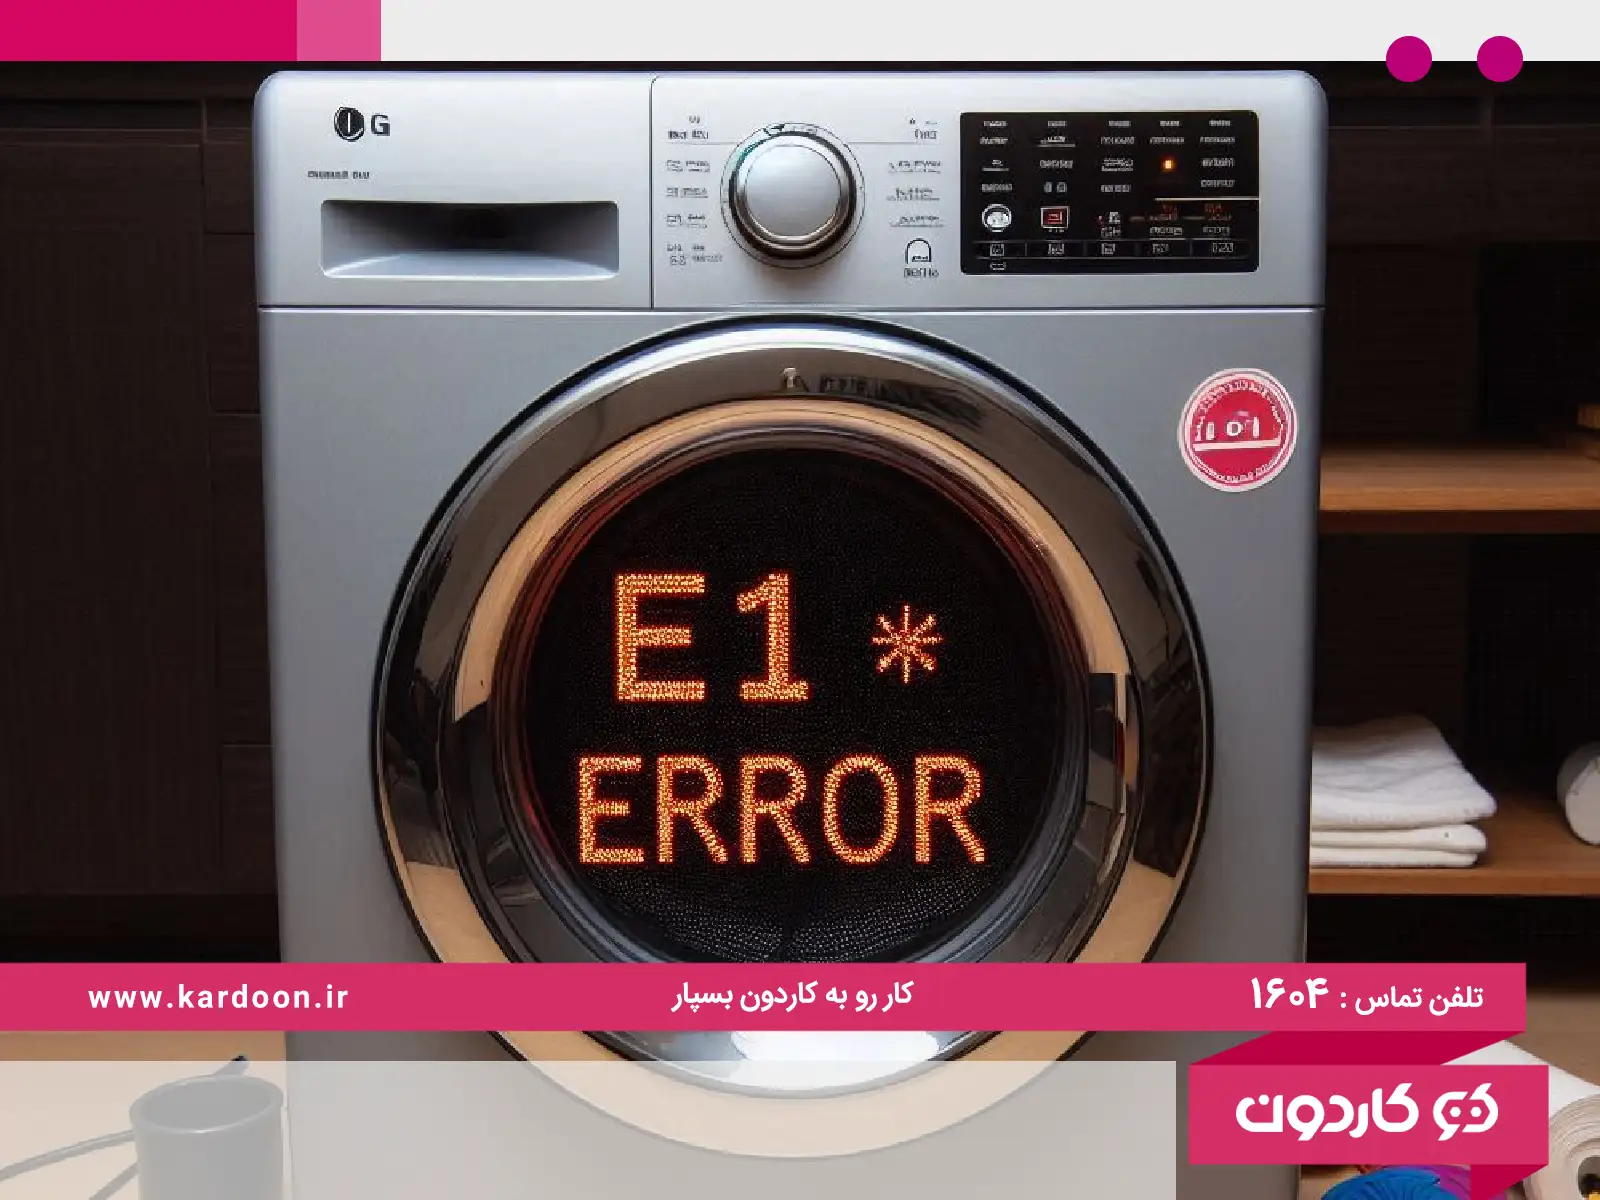 The cause of the LG washing machine se error